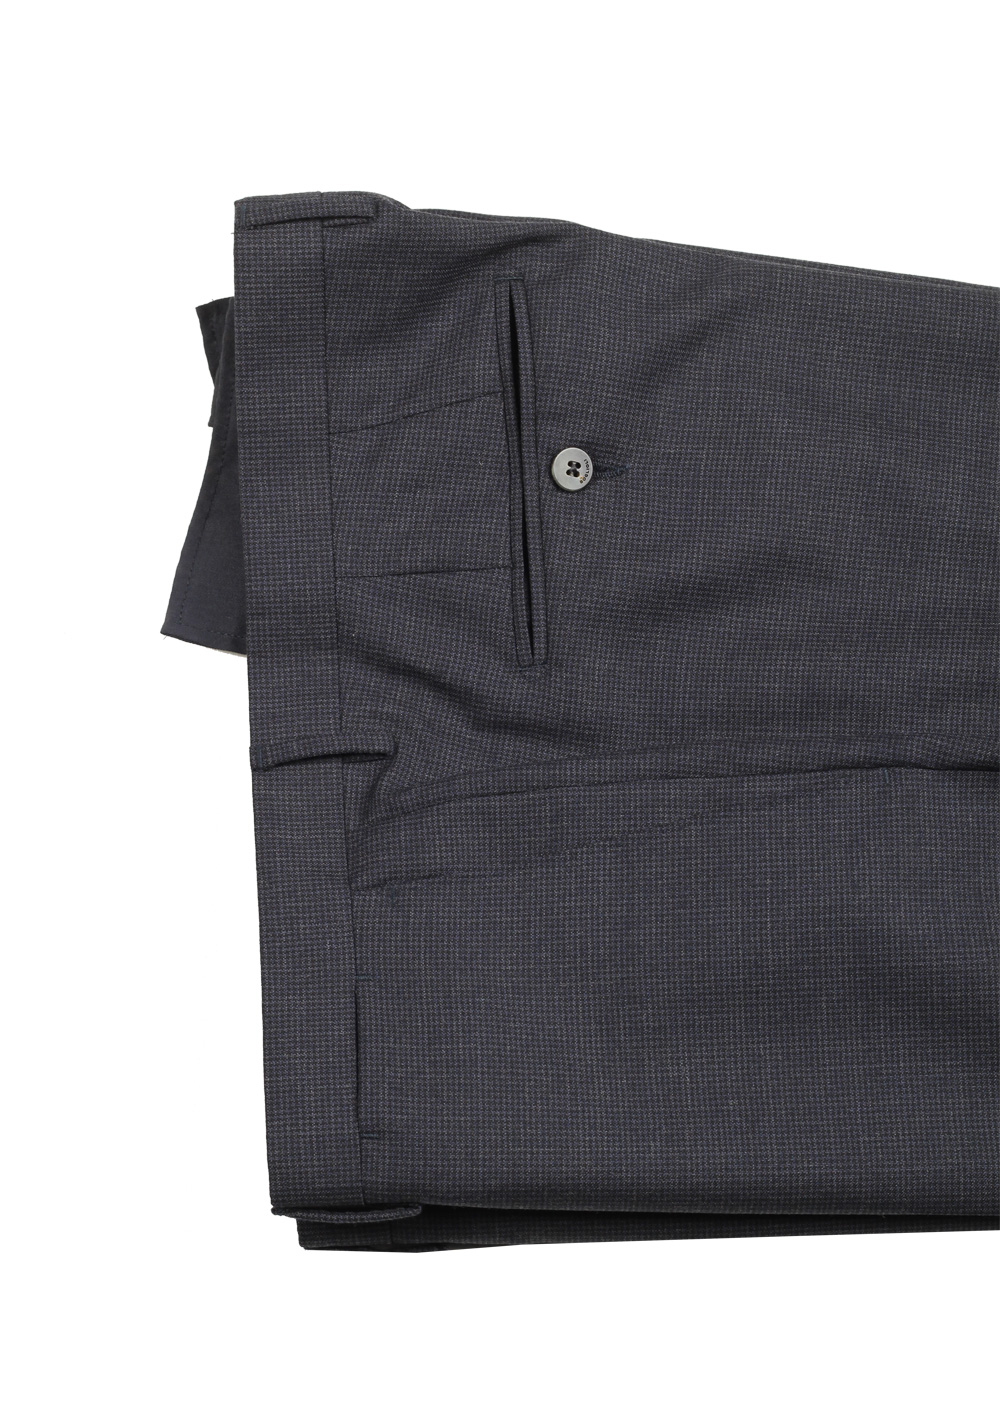 Boglioli K Jacket Gray Suit Size 54 / 44R U.S. | Costume Limité